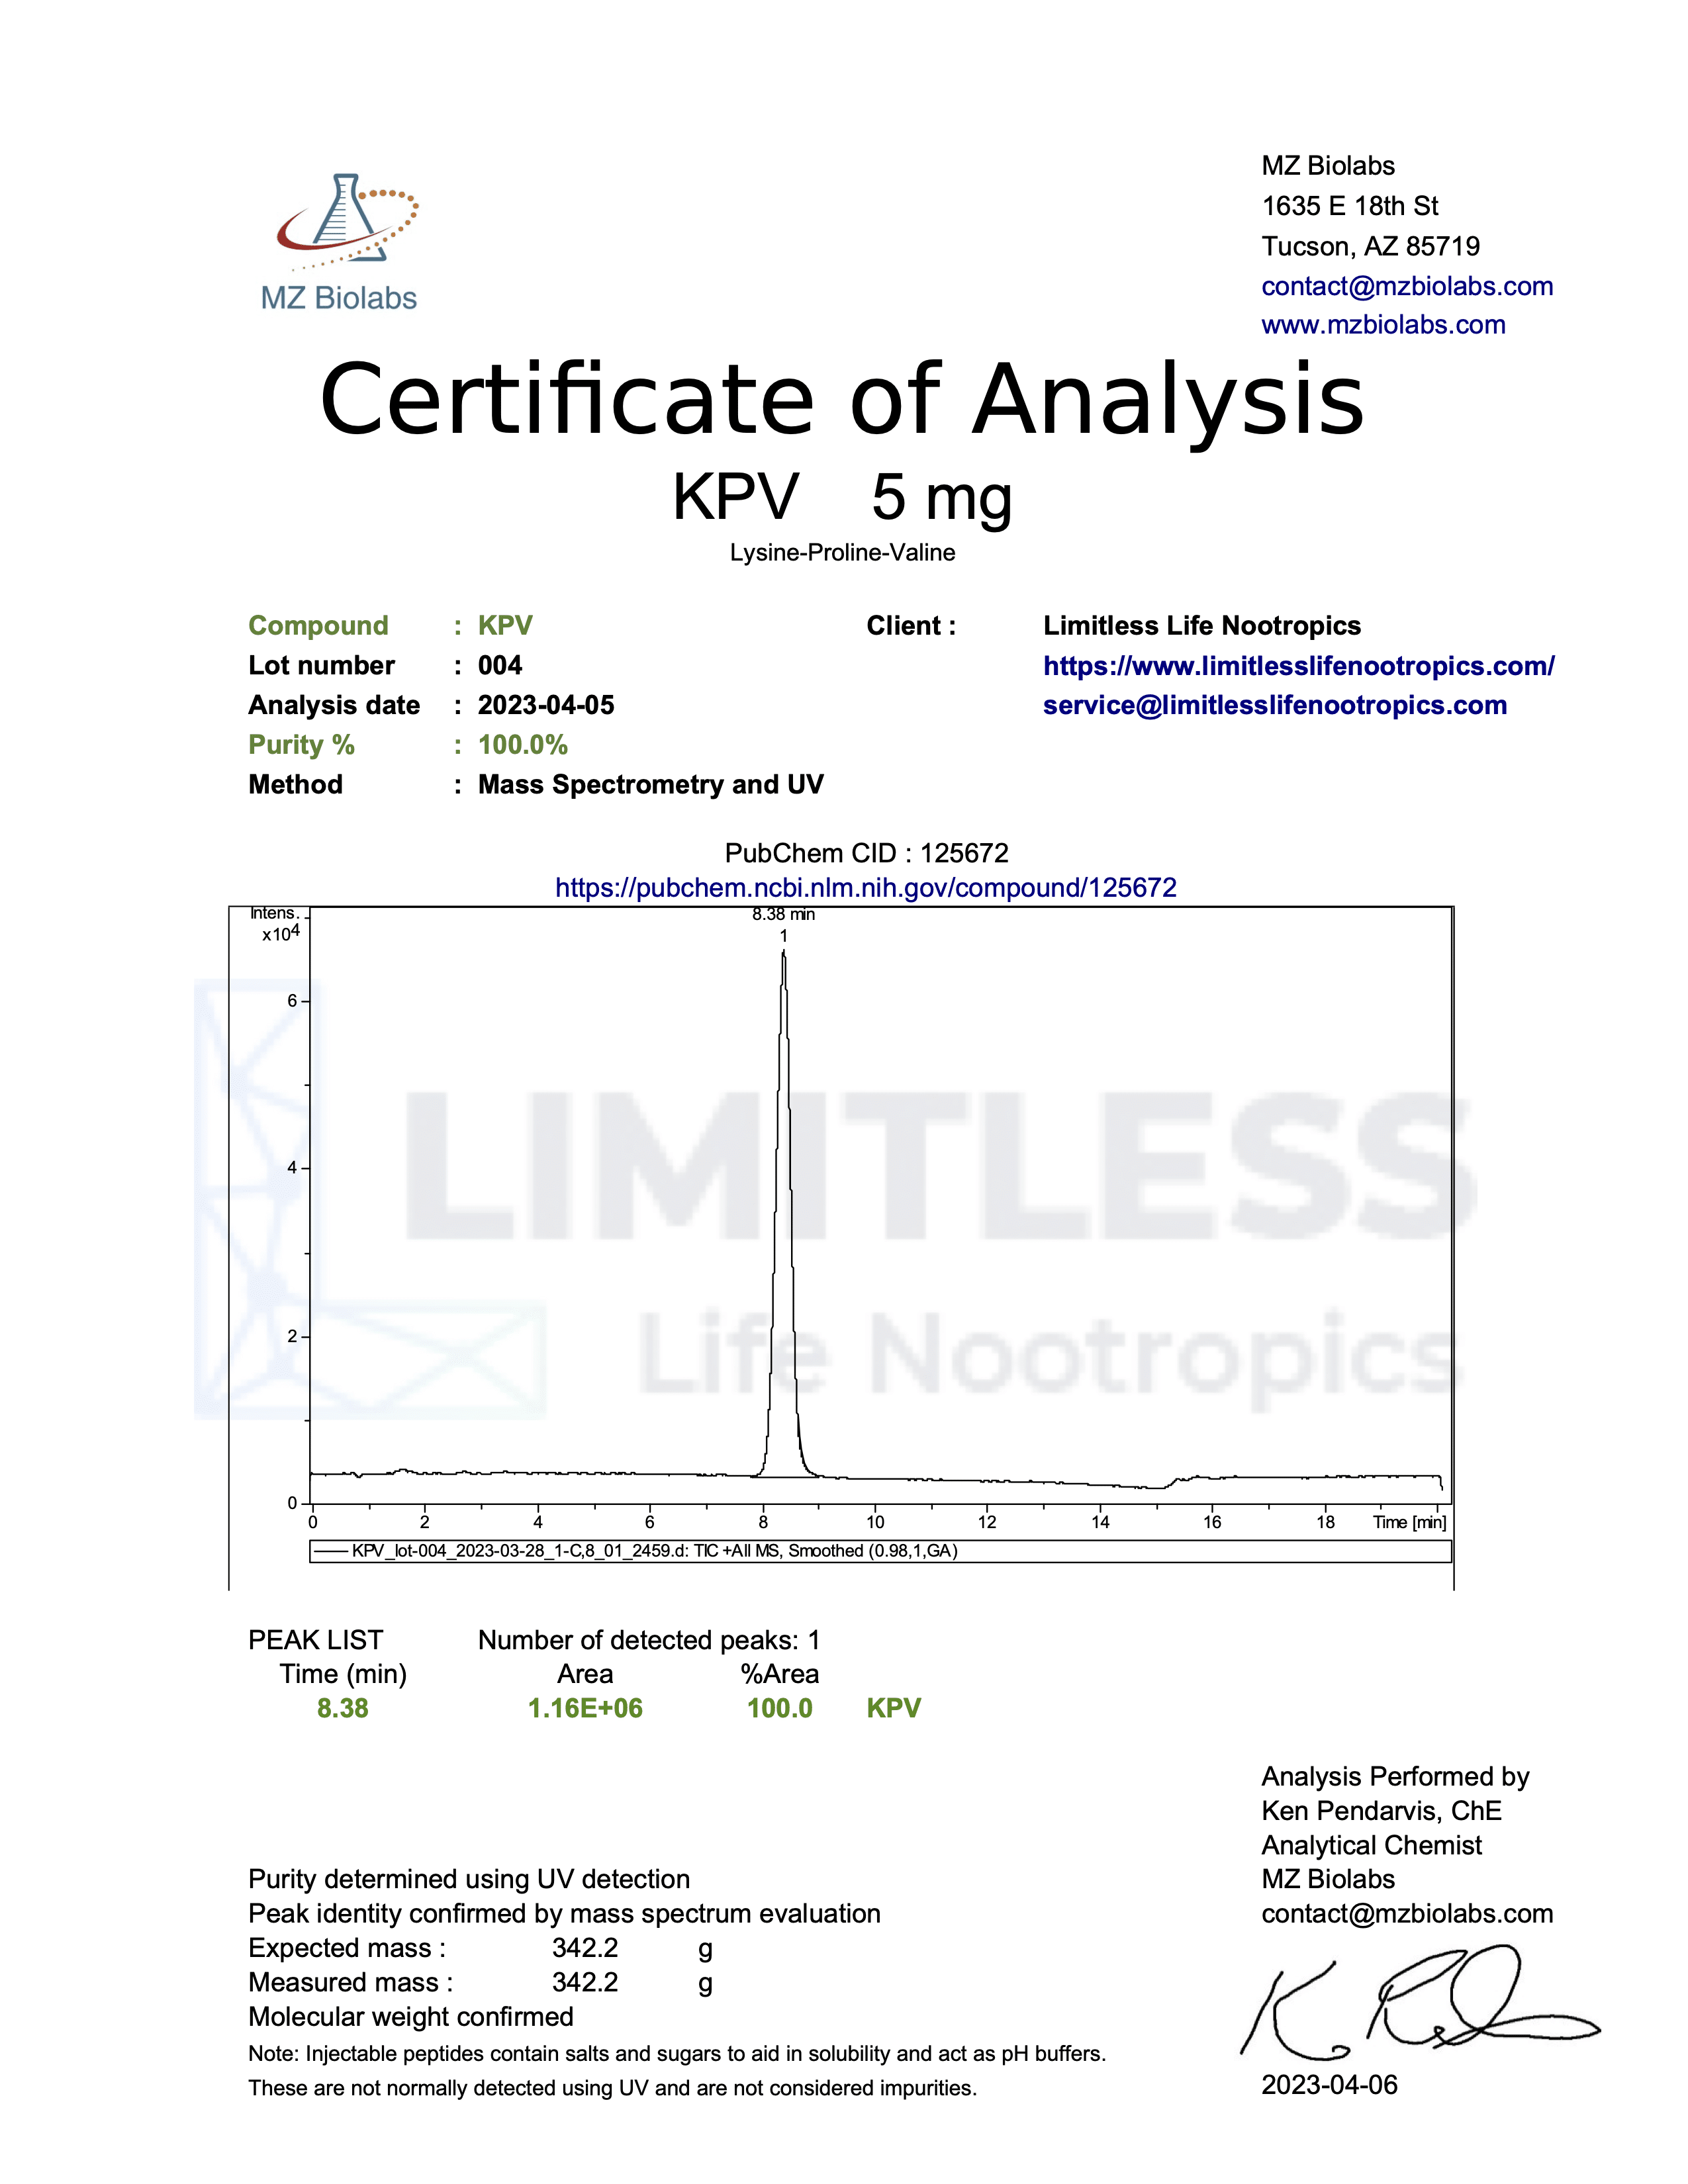 Certificate of Analysis for KVP 5 mg